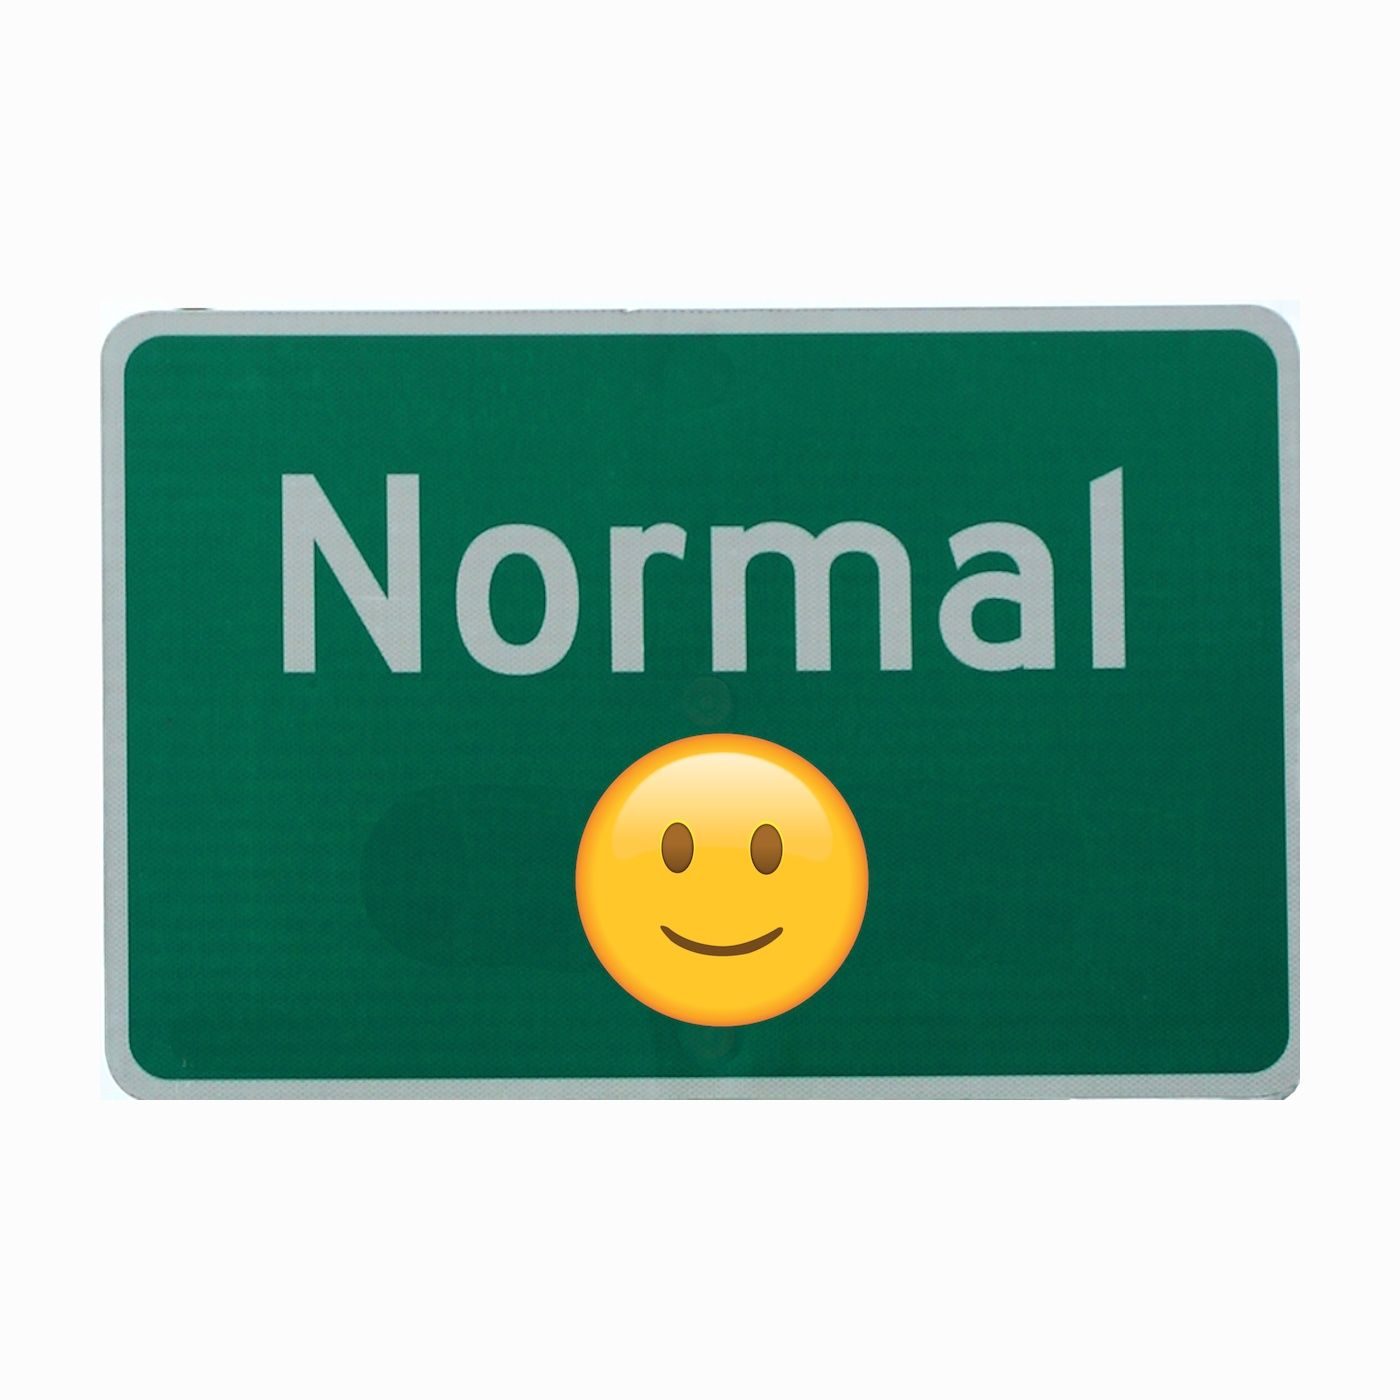 Let's get normal